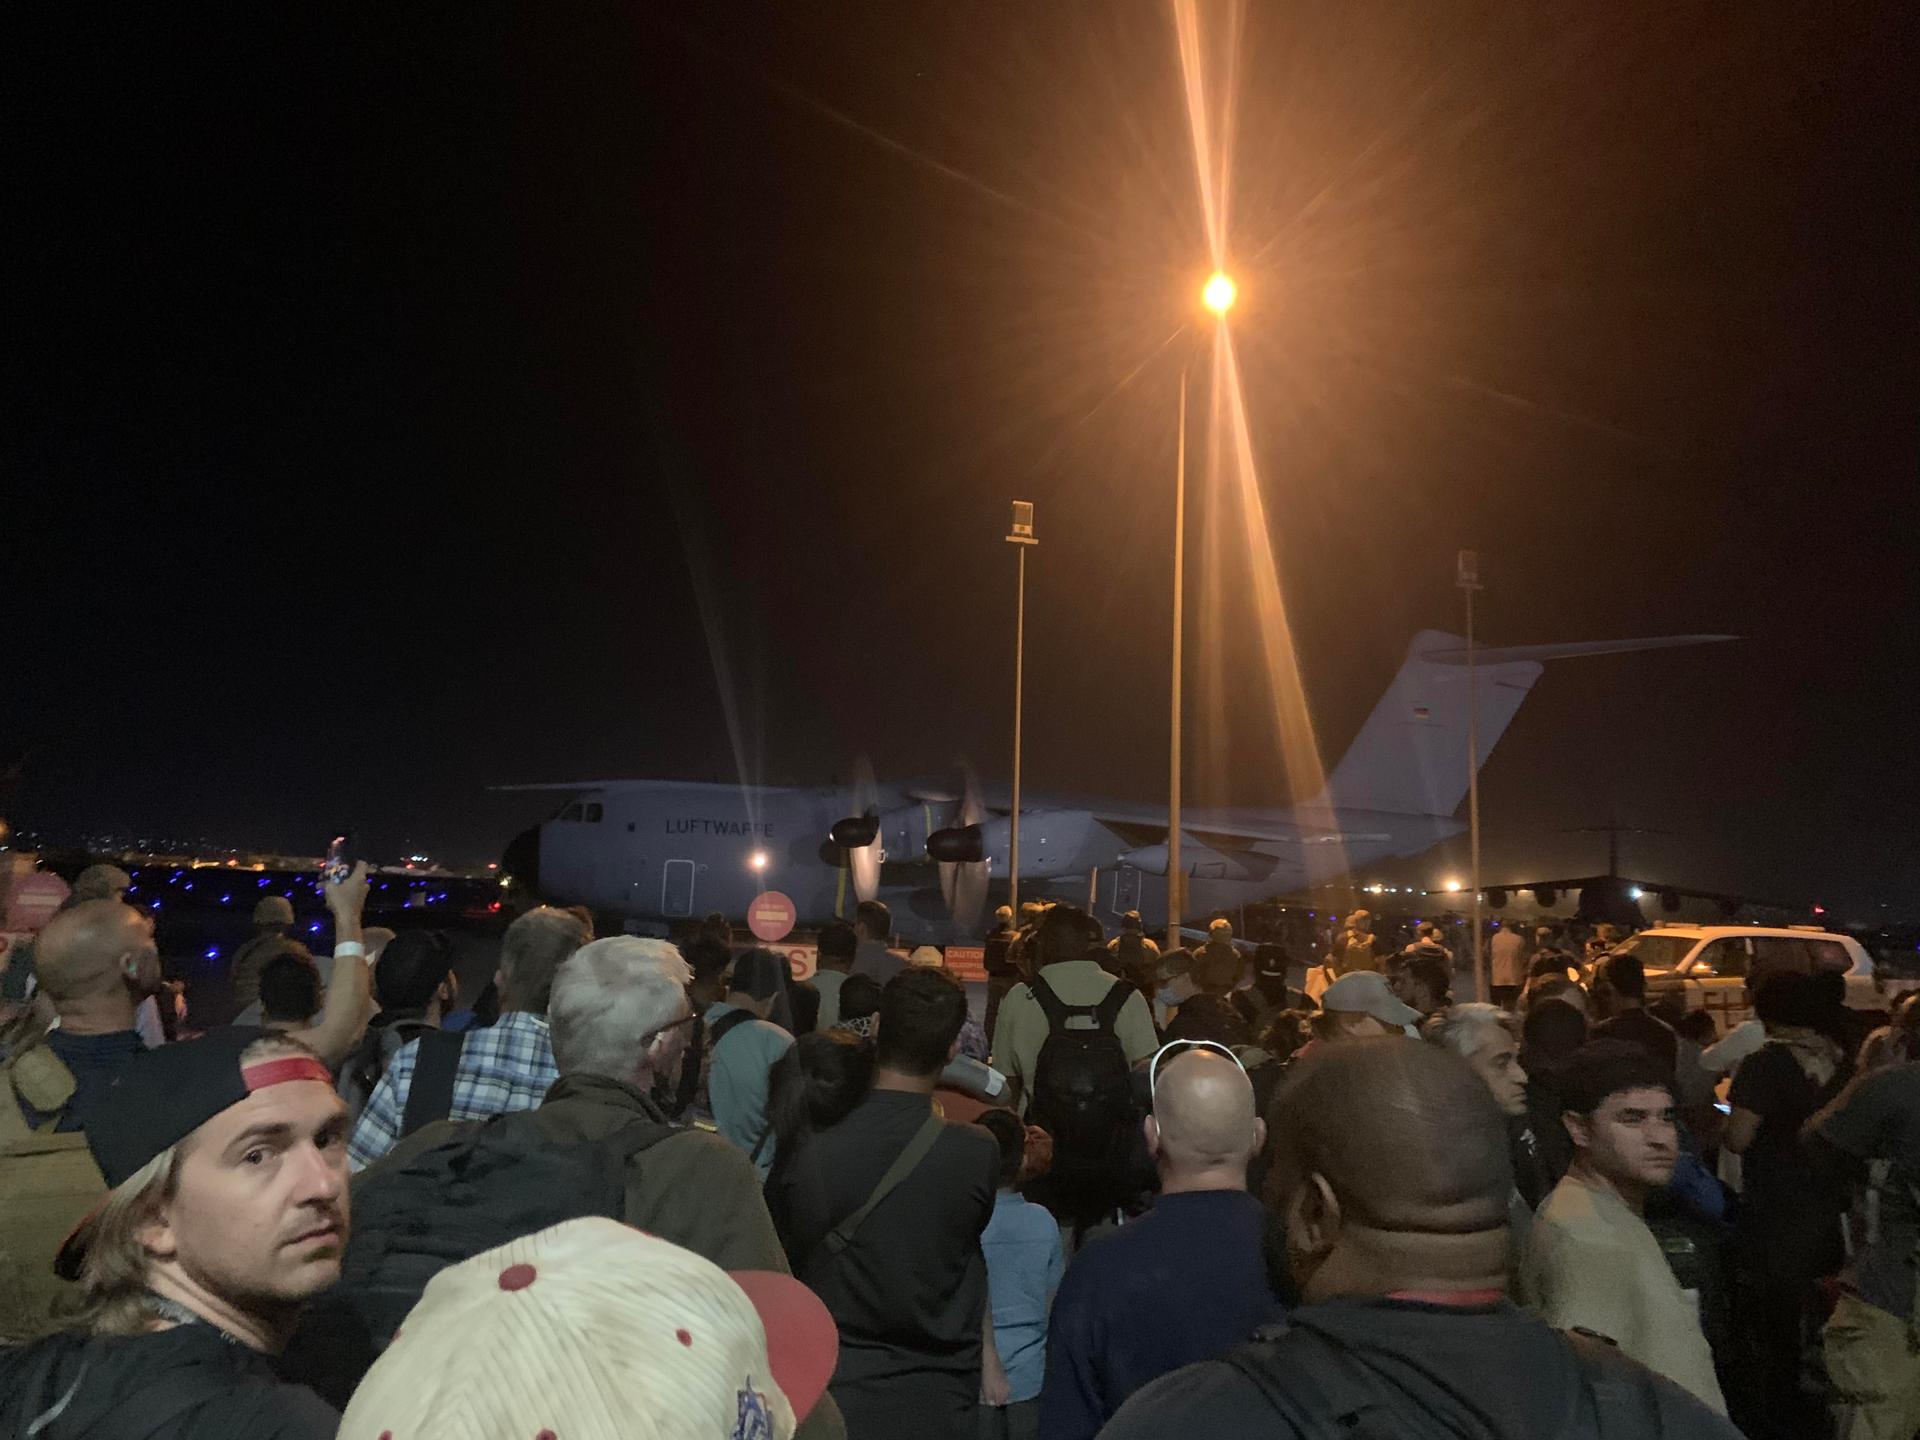 Crowd at night gathered around a Luftwaffe transport plane